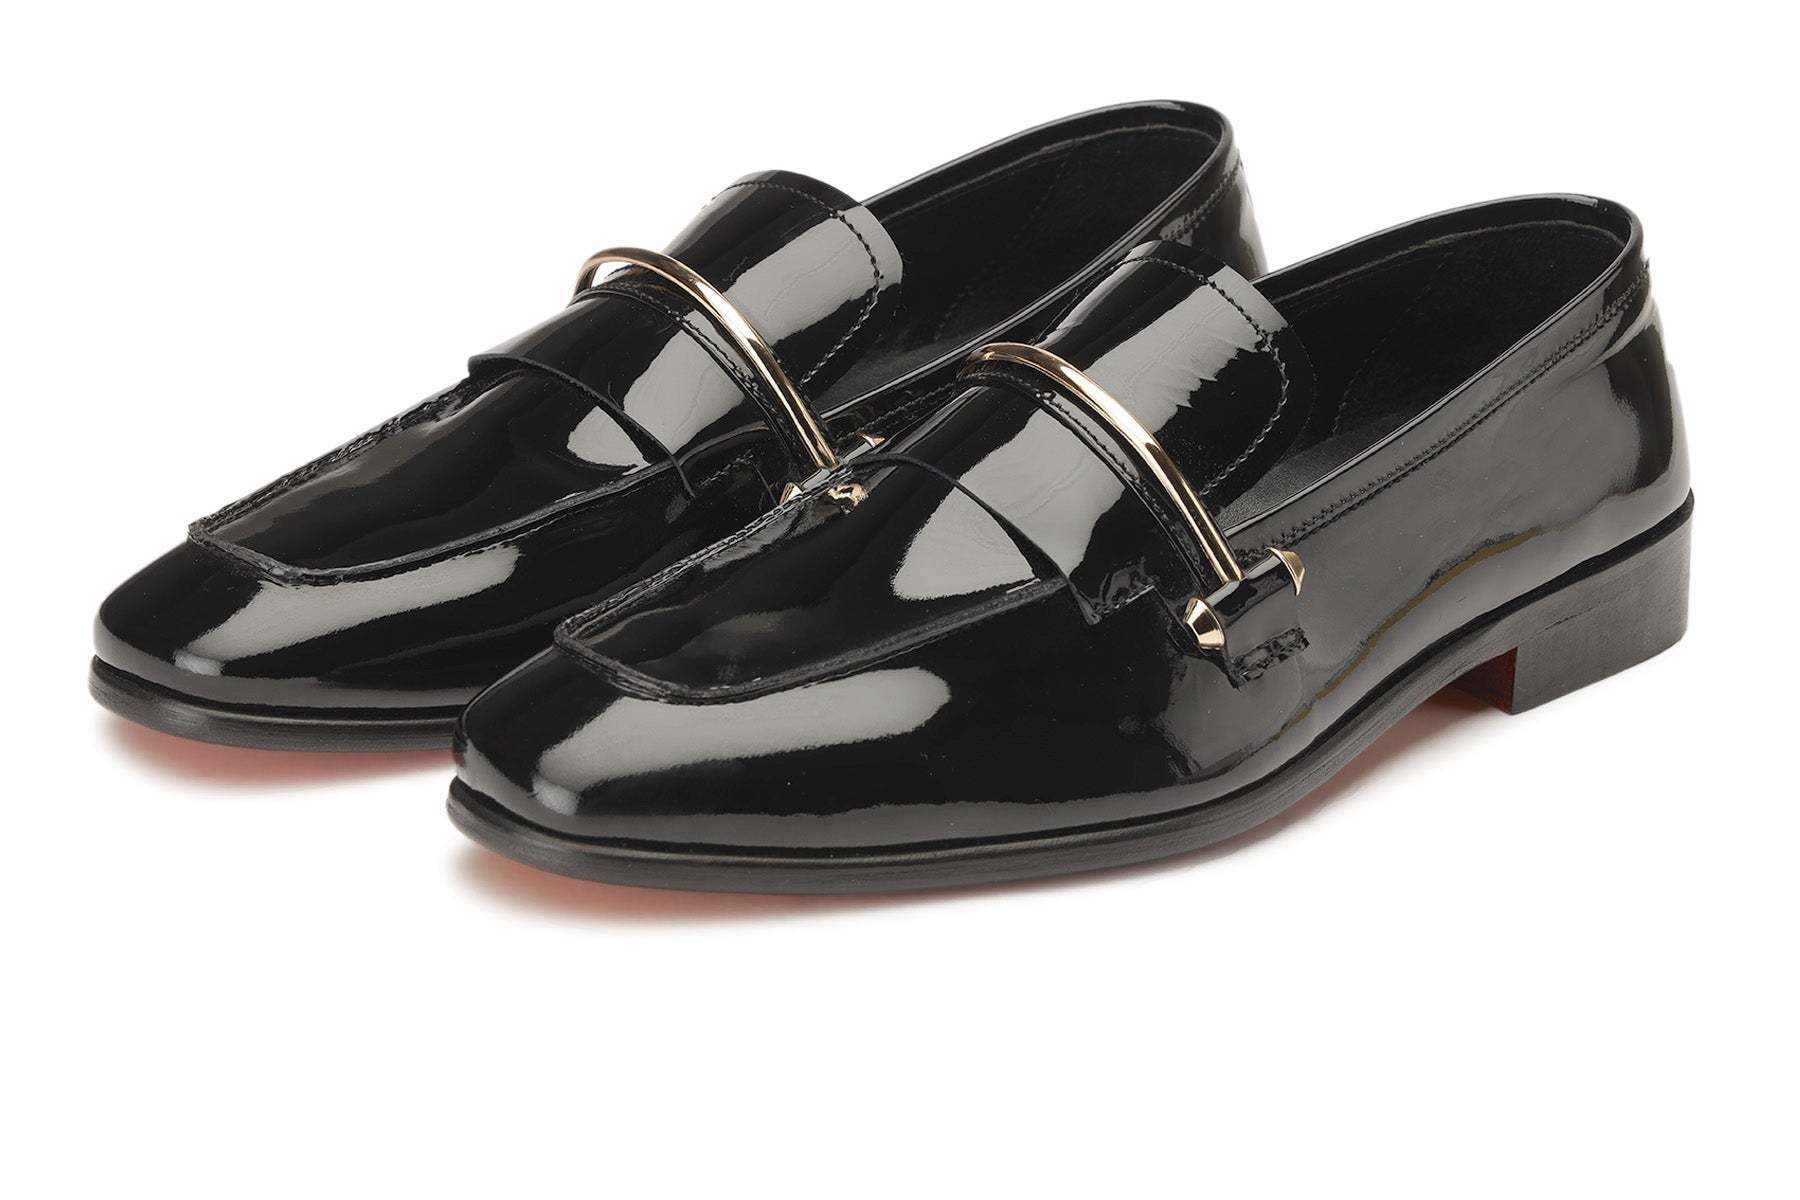 Patent Leather Shoes A Timeless Classic – Shutiq